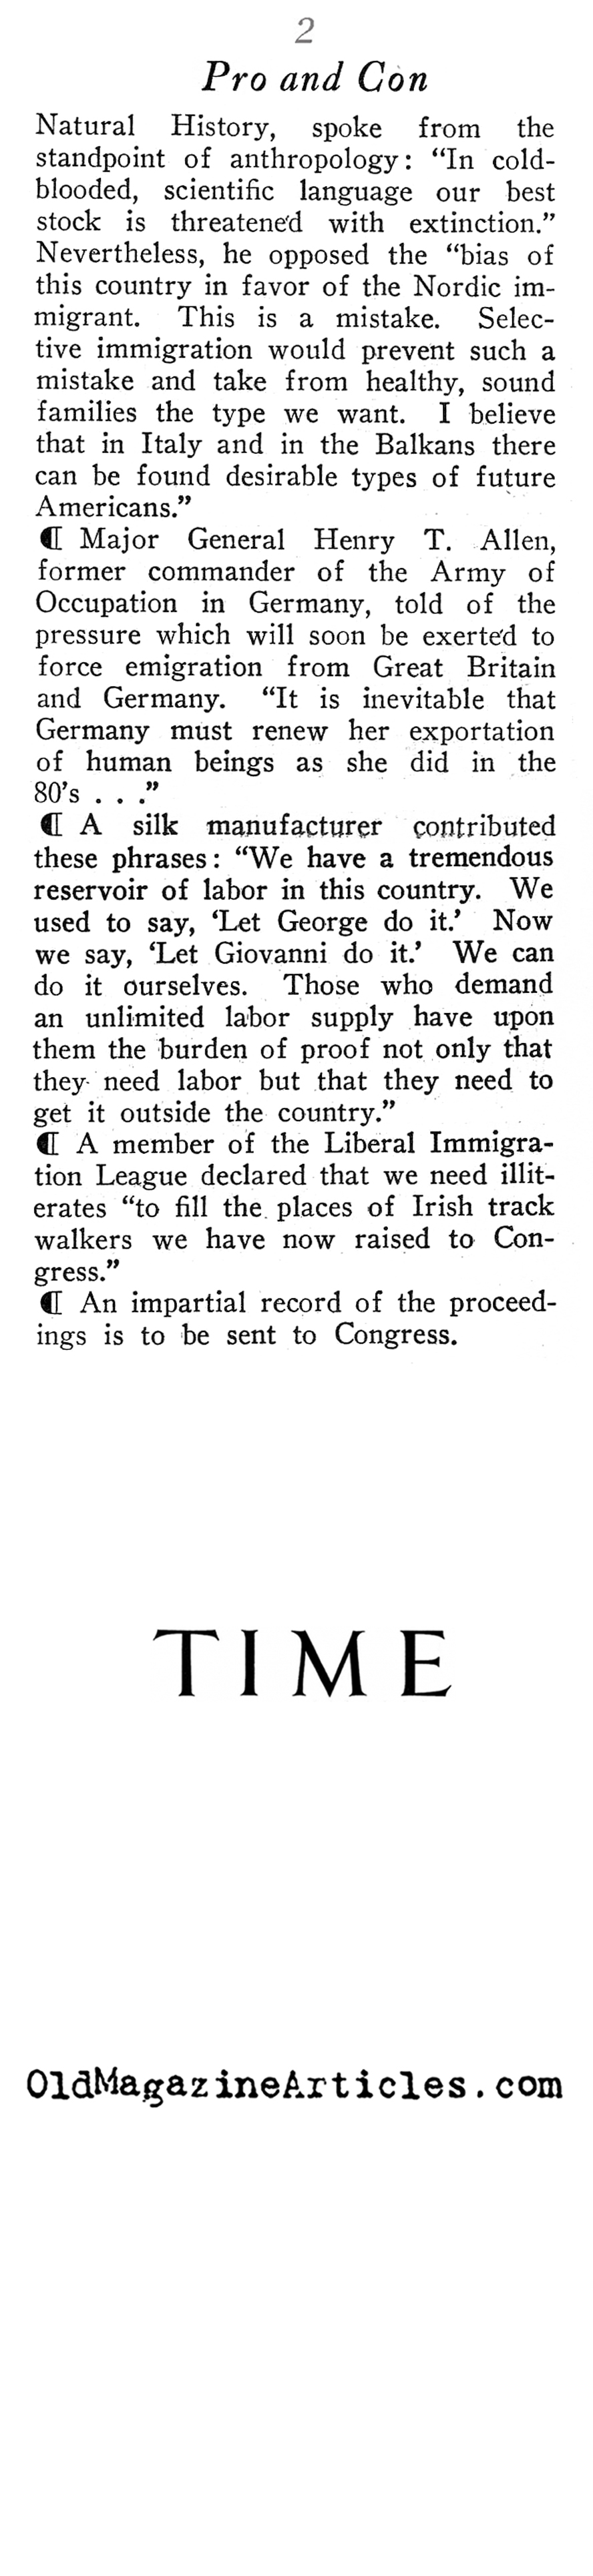 Debating Immigration (Time Magazine, 1923)